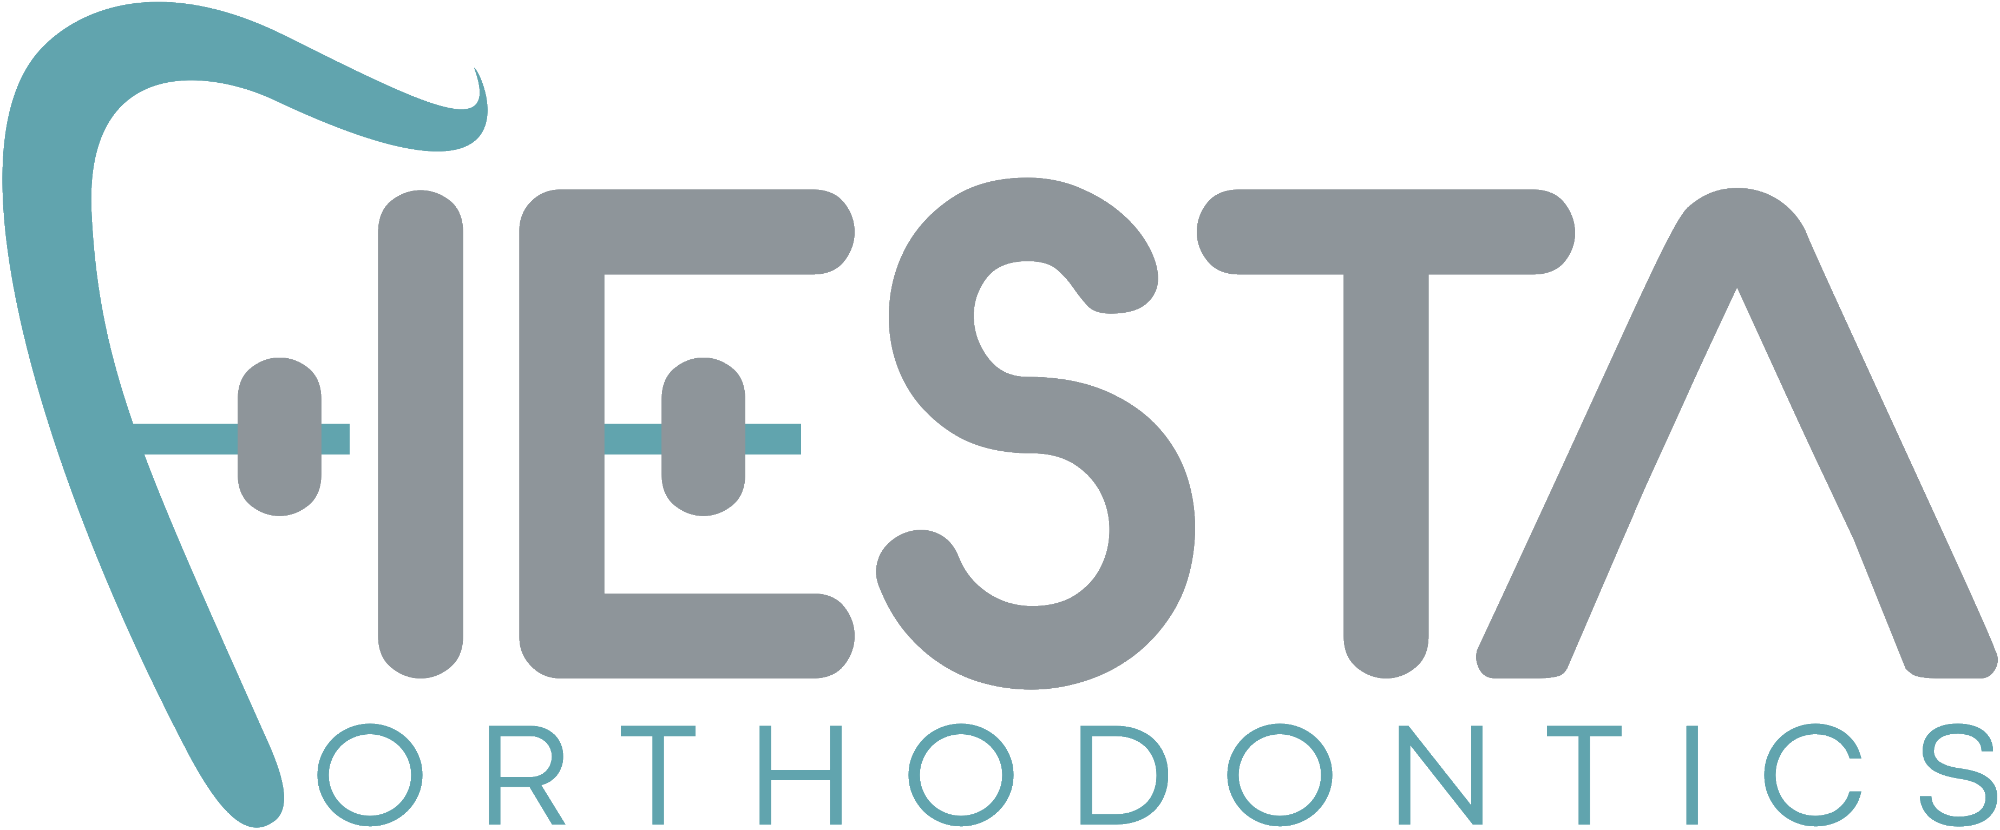 Fiesta Orthodontics logo